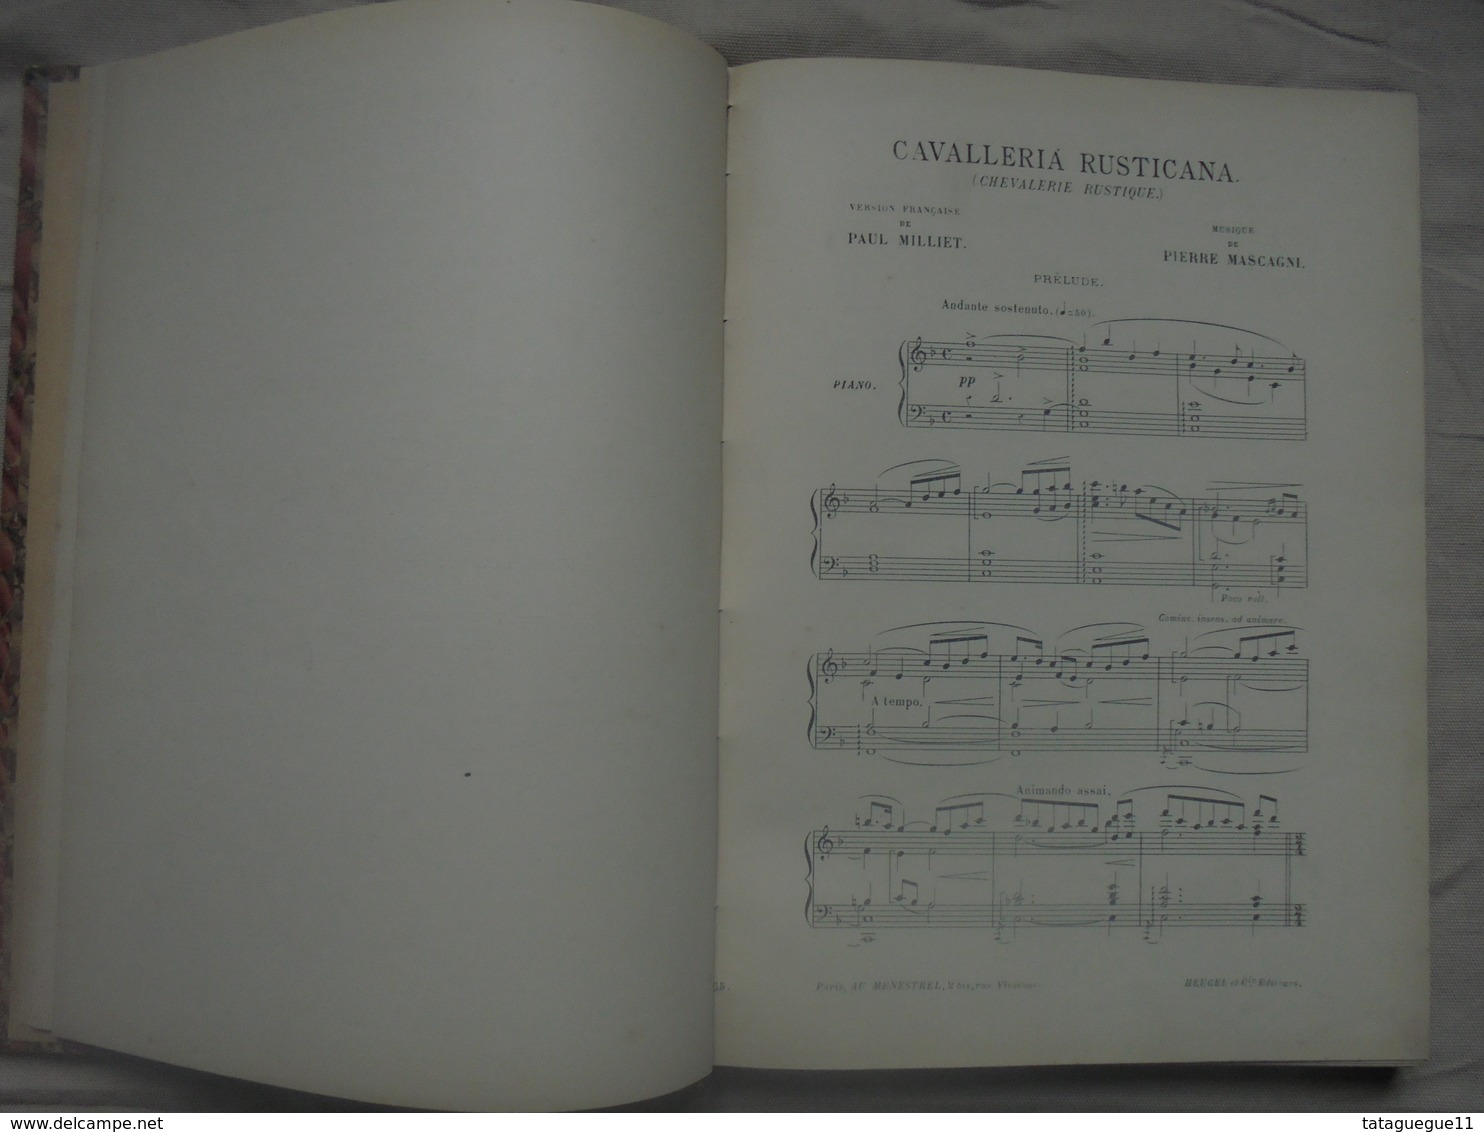 Ancien - Livre Partition CAVALLERIA RUSTICANA De J.Targioni-Tozzetti Et G. Menasci - Klavierinstrumenten